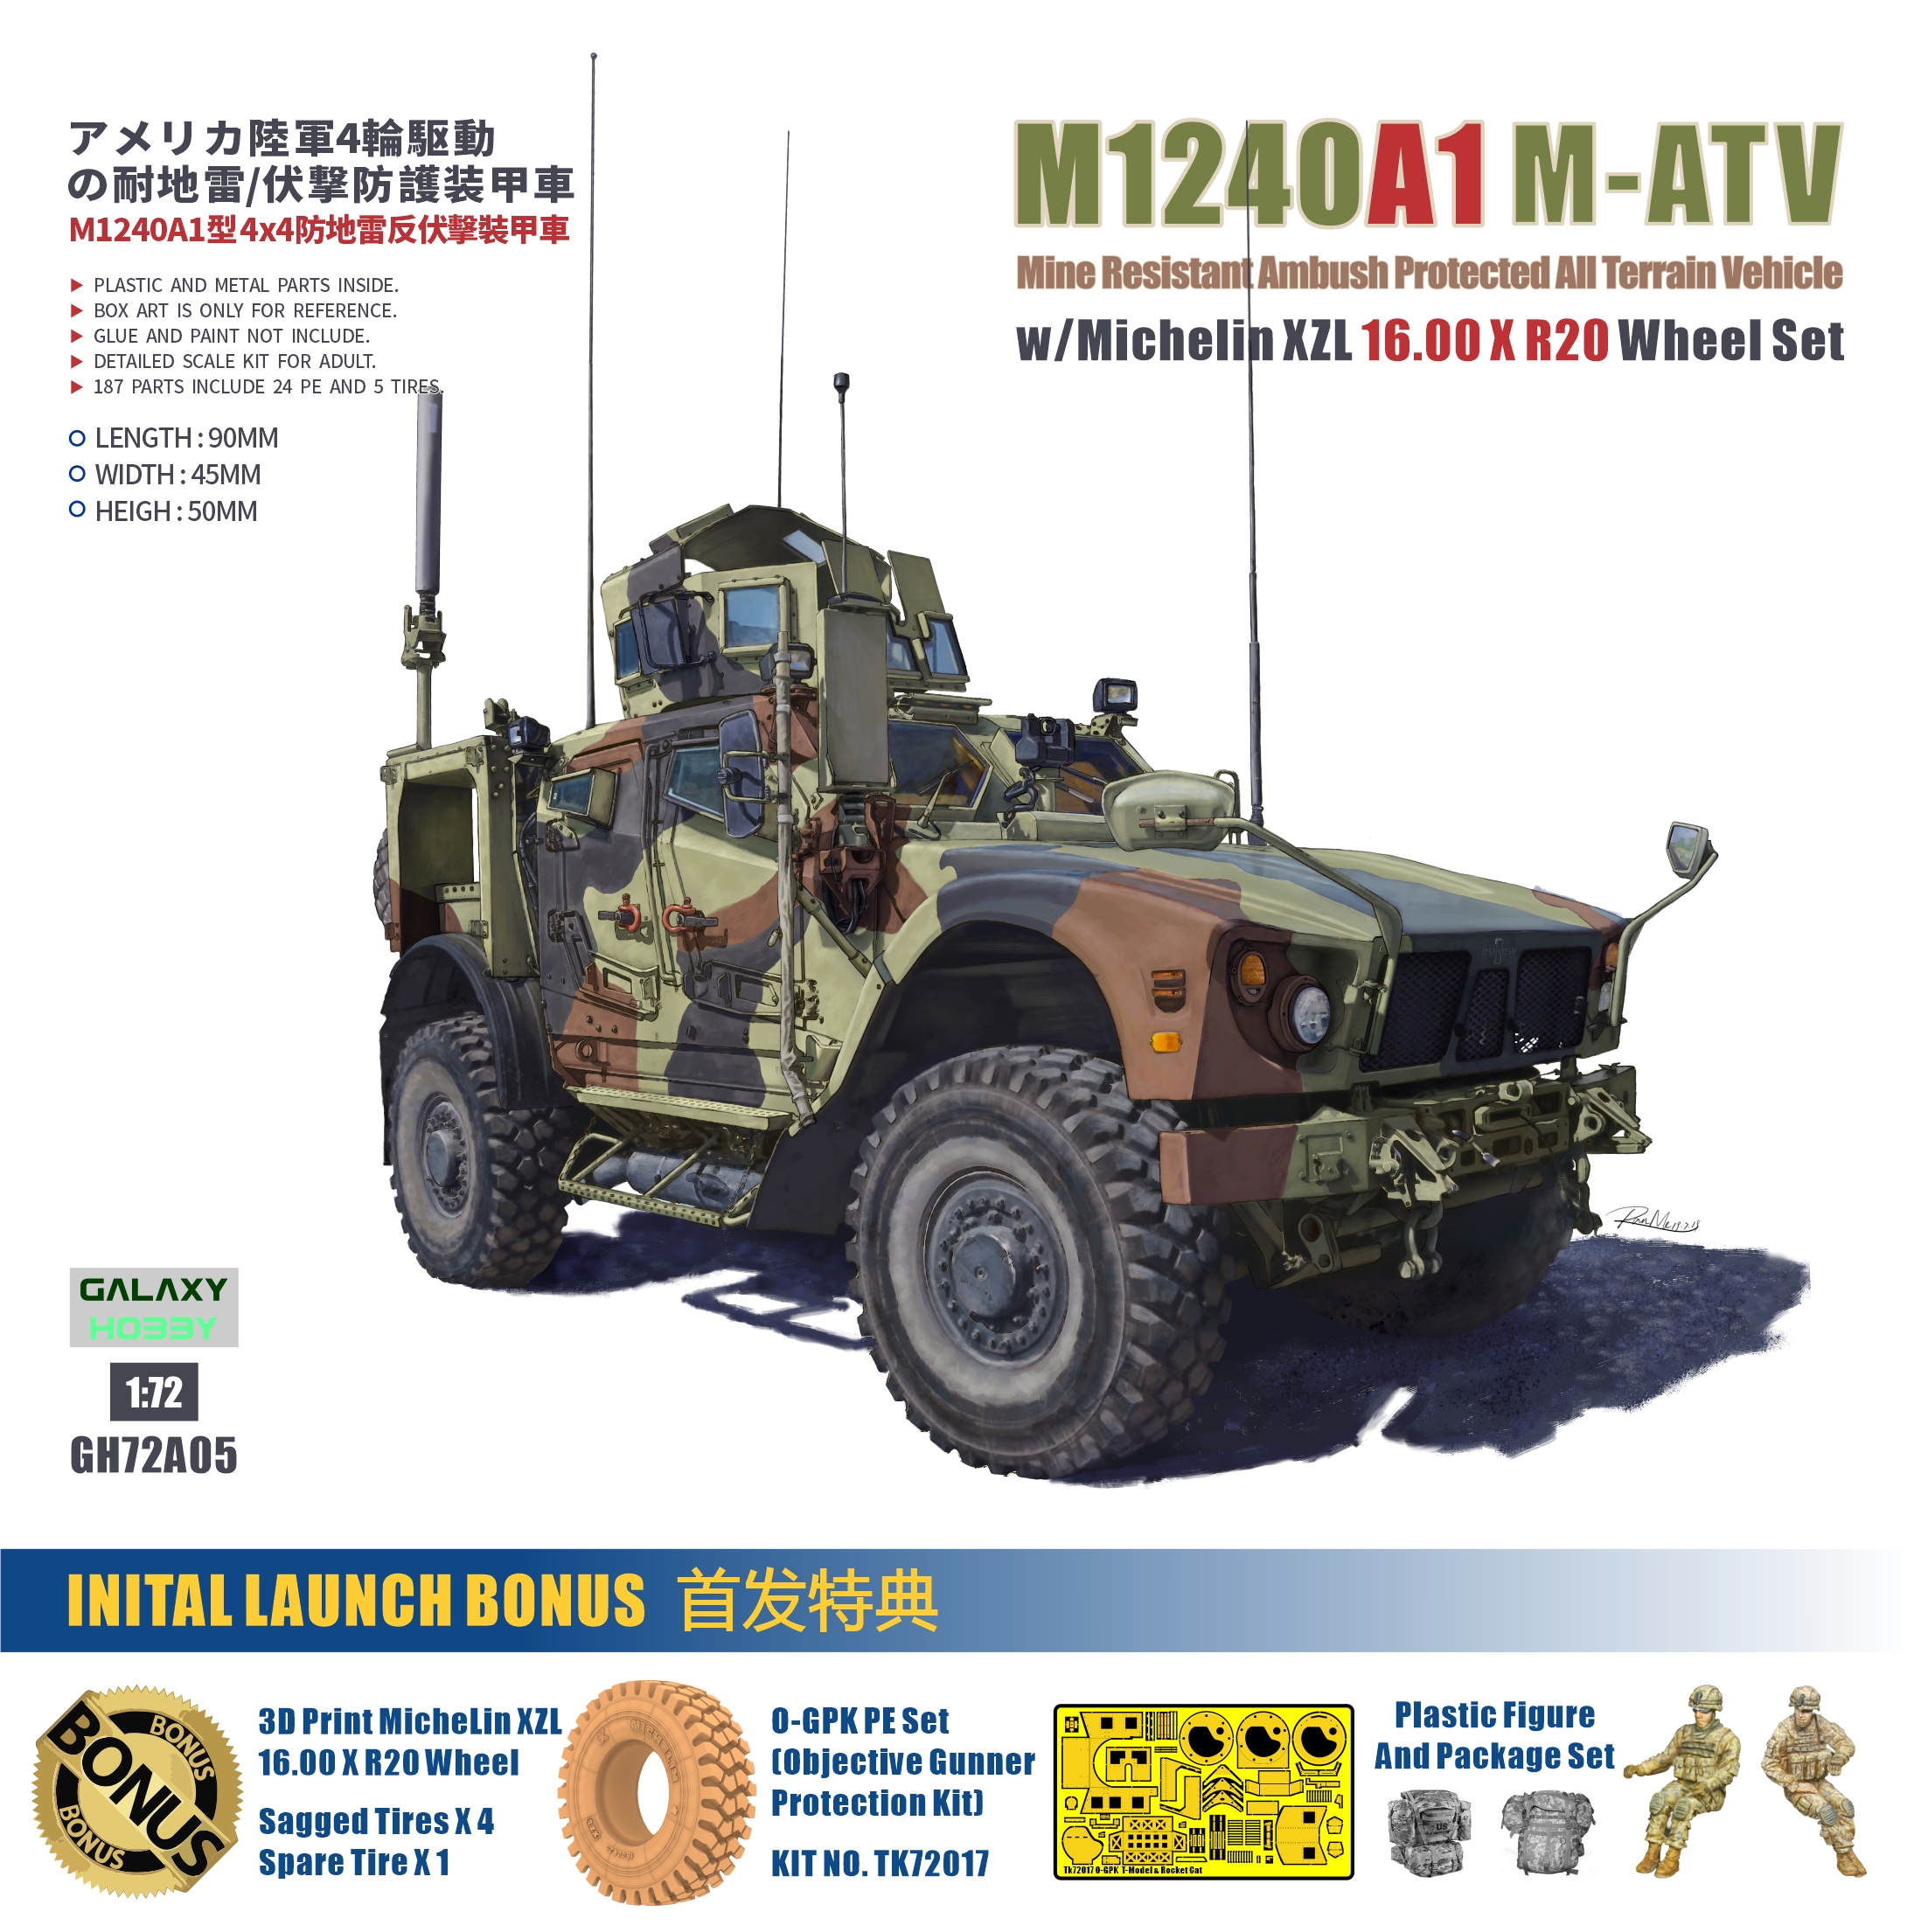 M1240A1 M-ATV with O-GPK turret